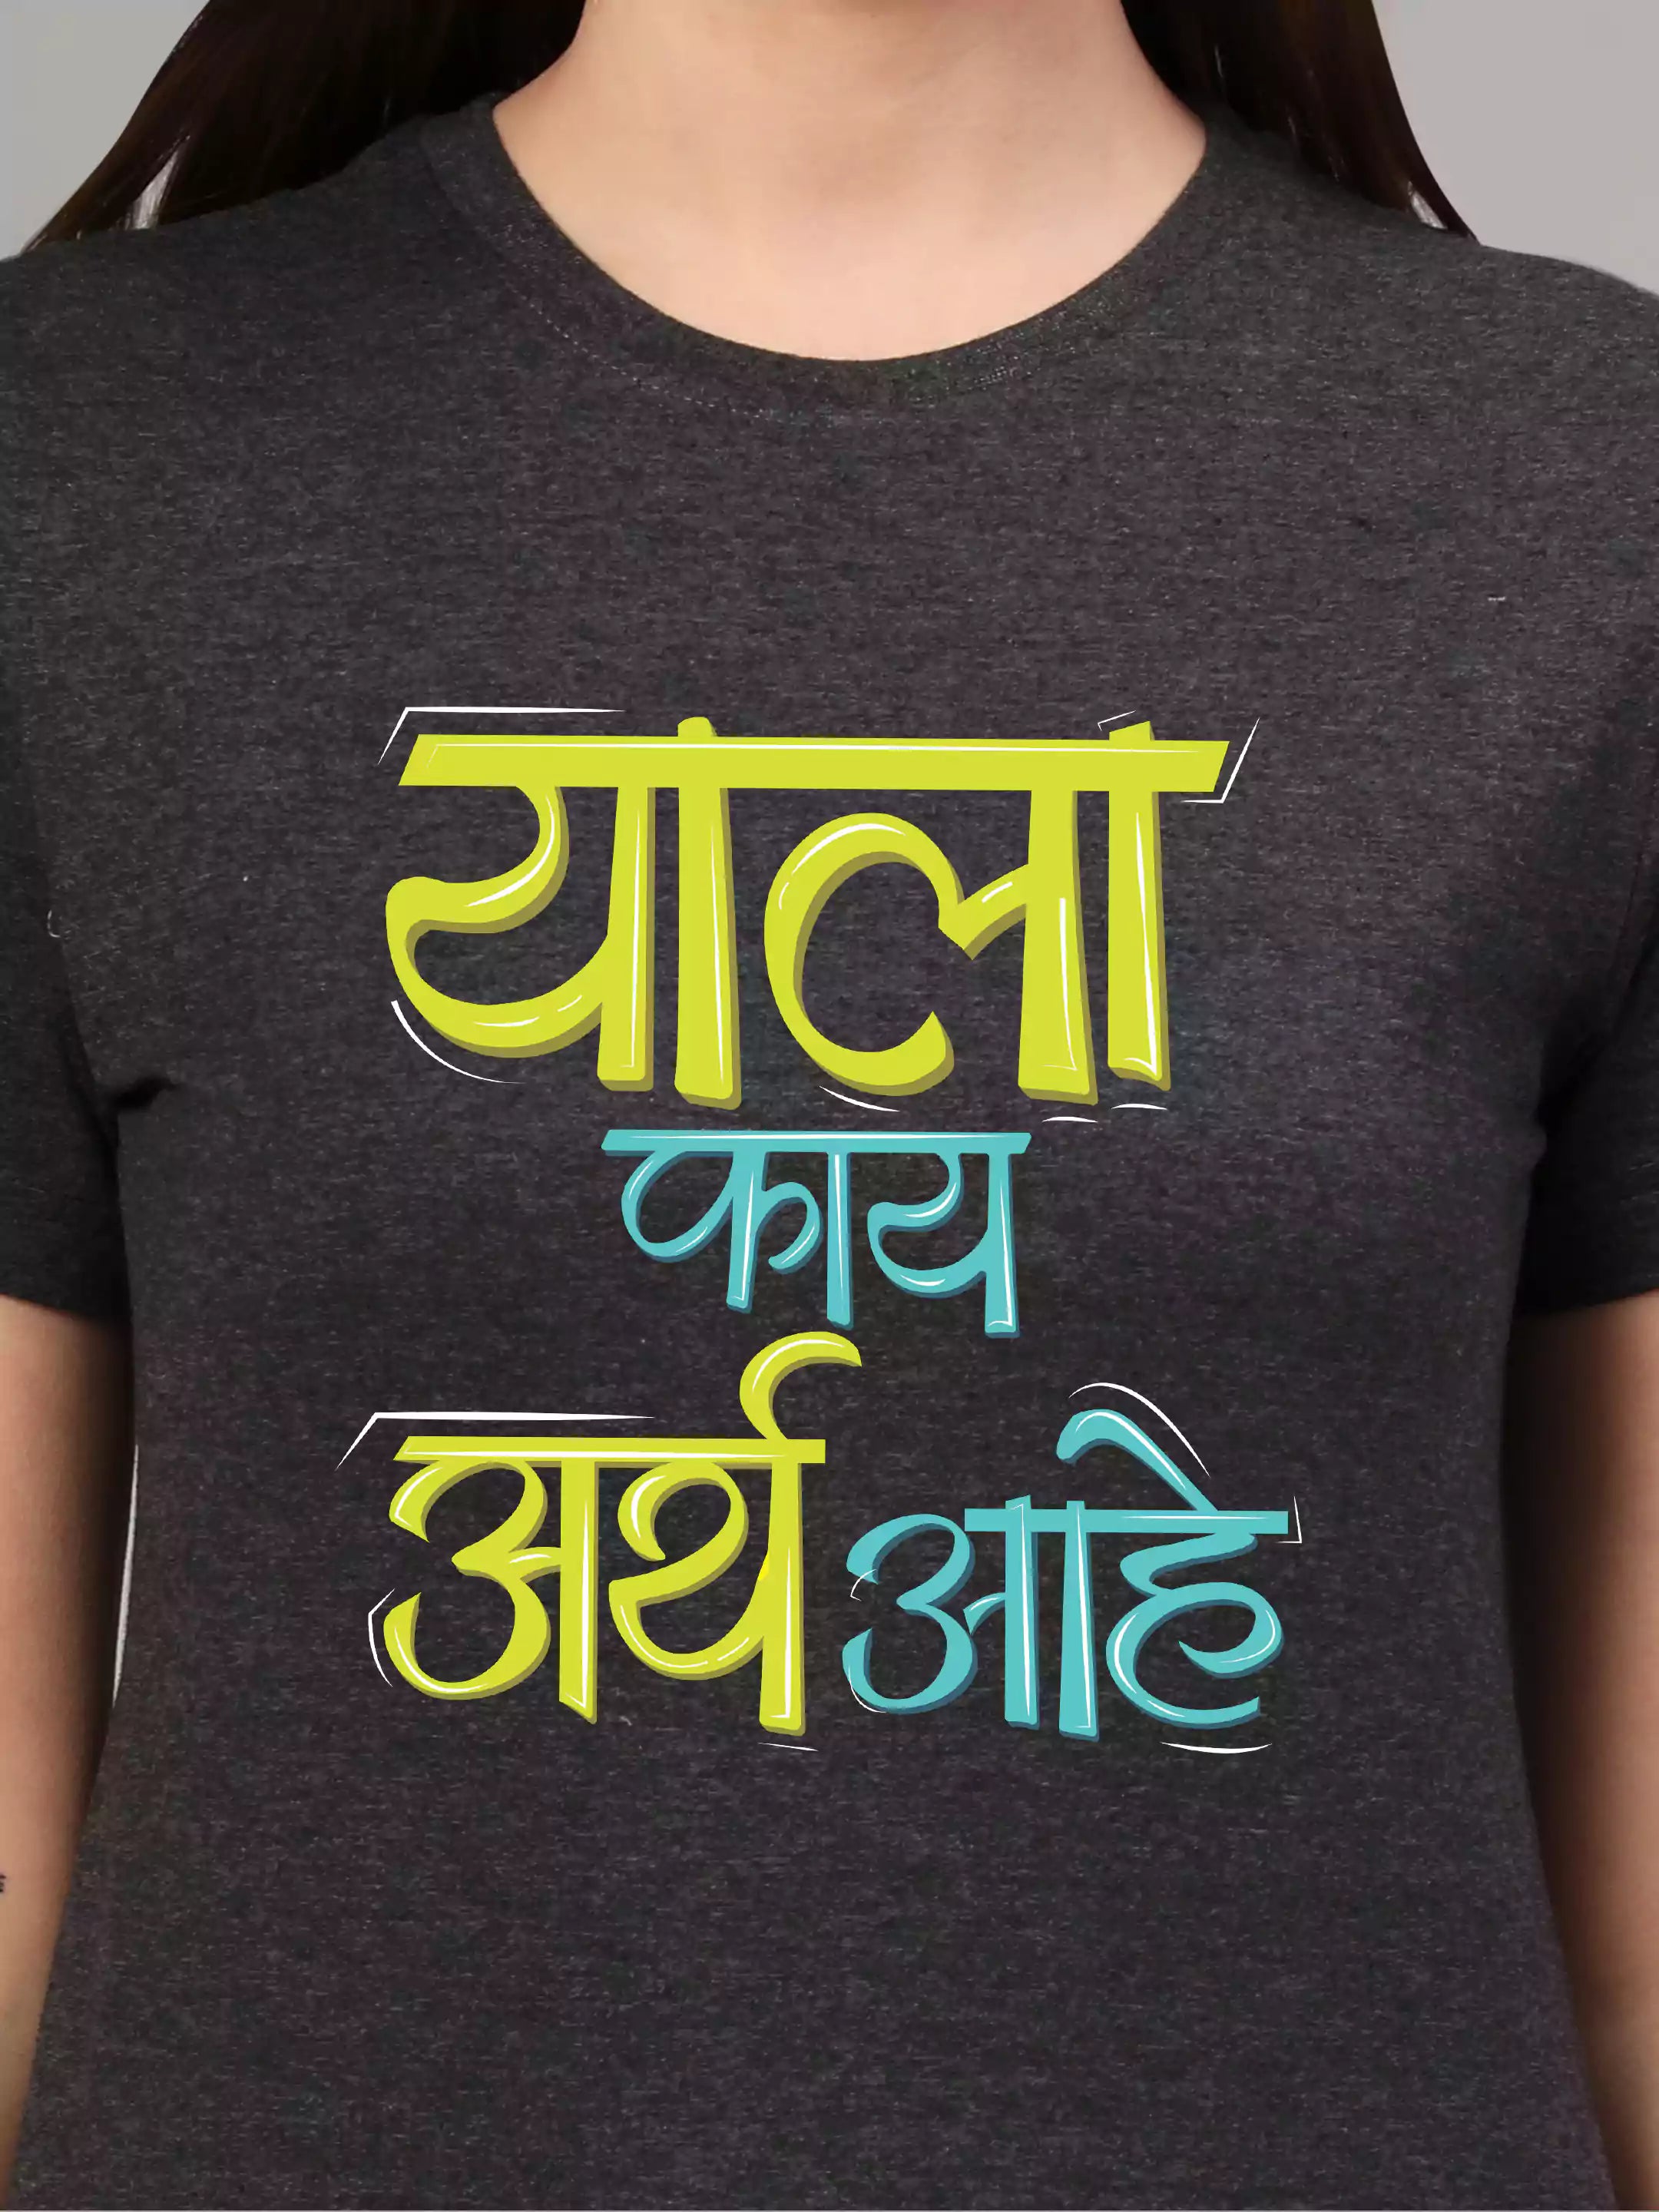 Yala kai aarth aahe - Sukhiaatma Unisex Marathi Graphic Printed CG T-shirt